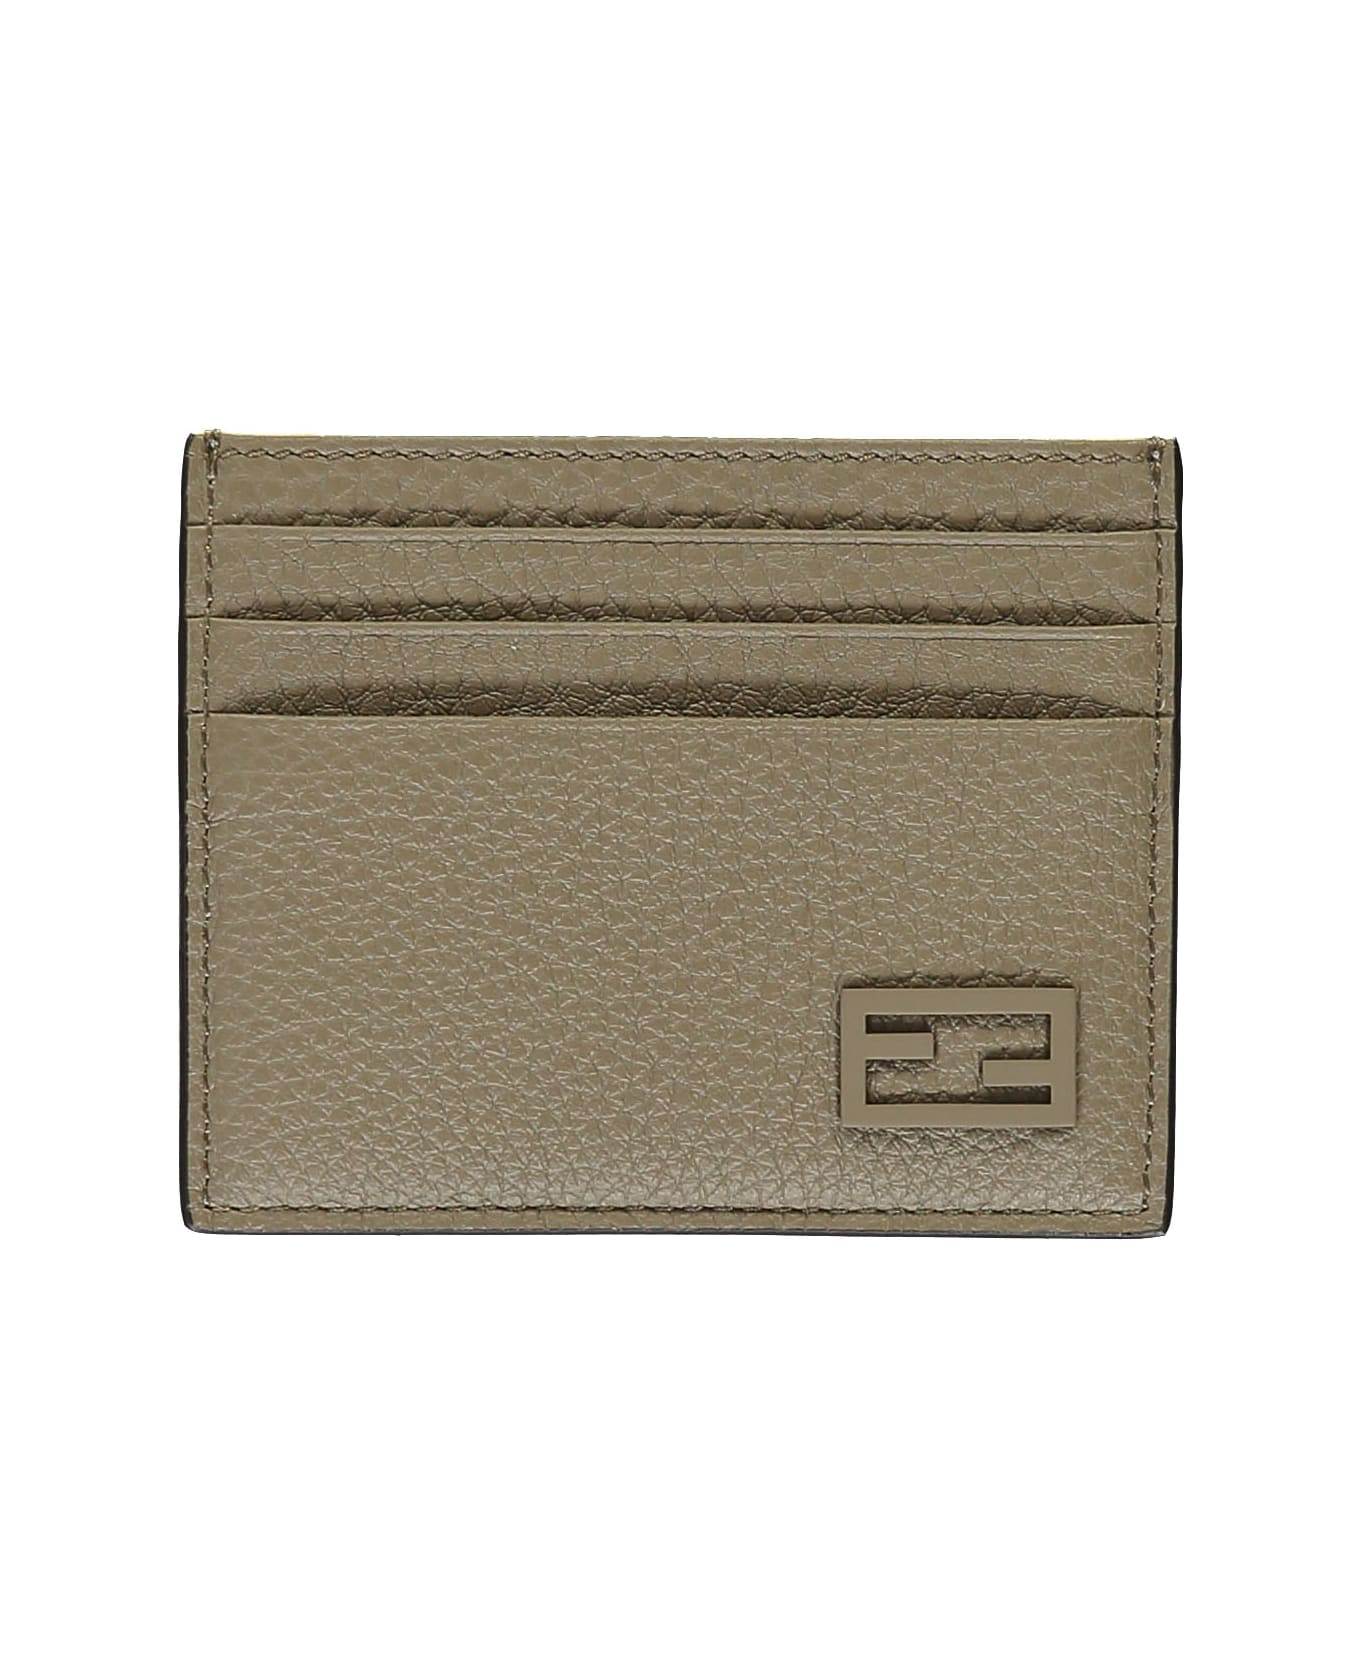 Fendi logo Leather Card Holder - brown